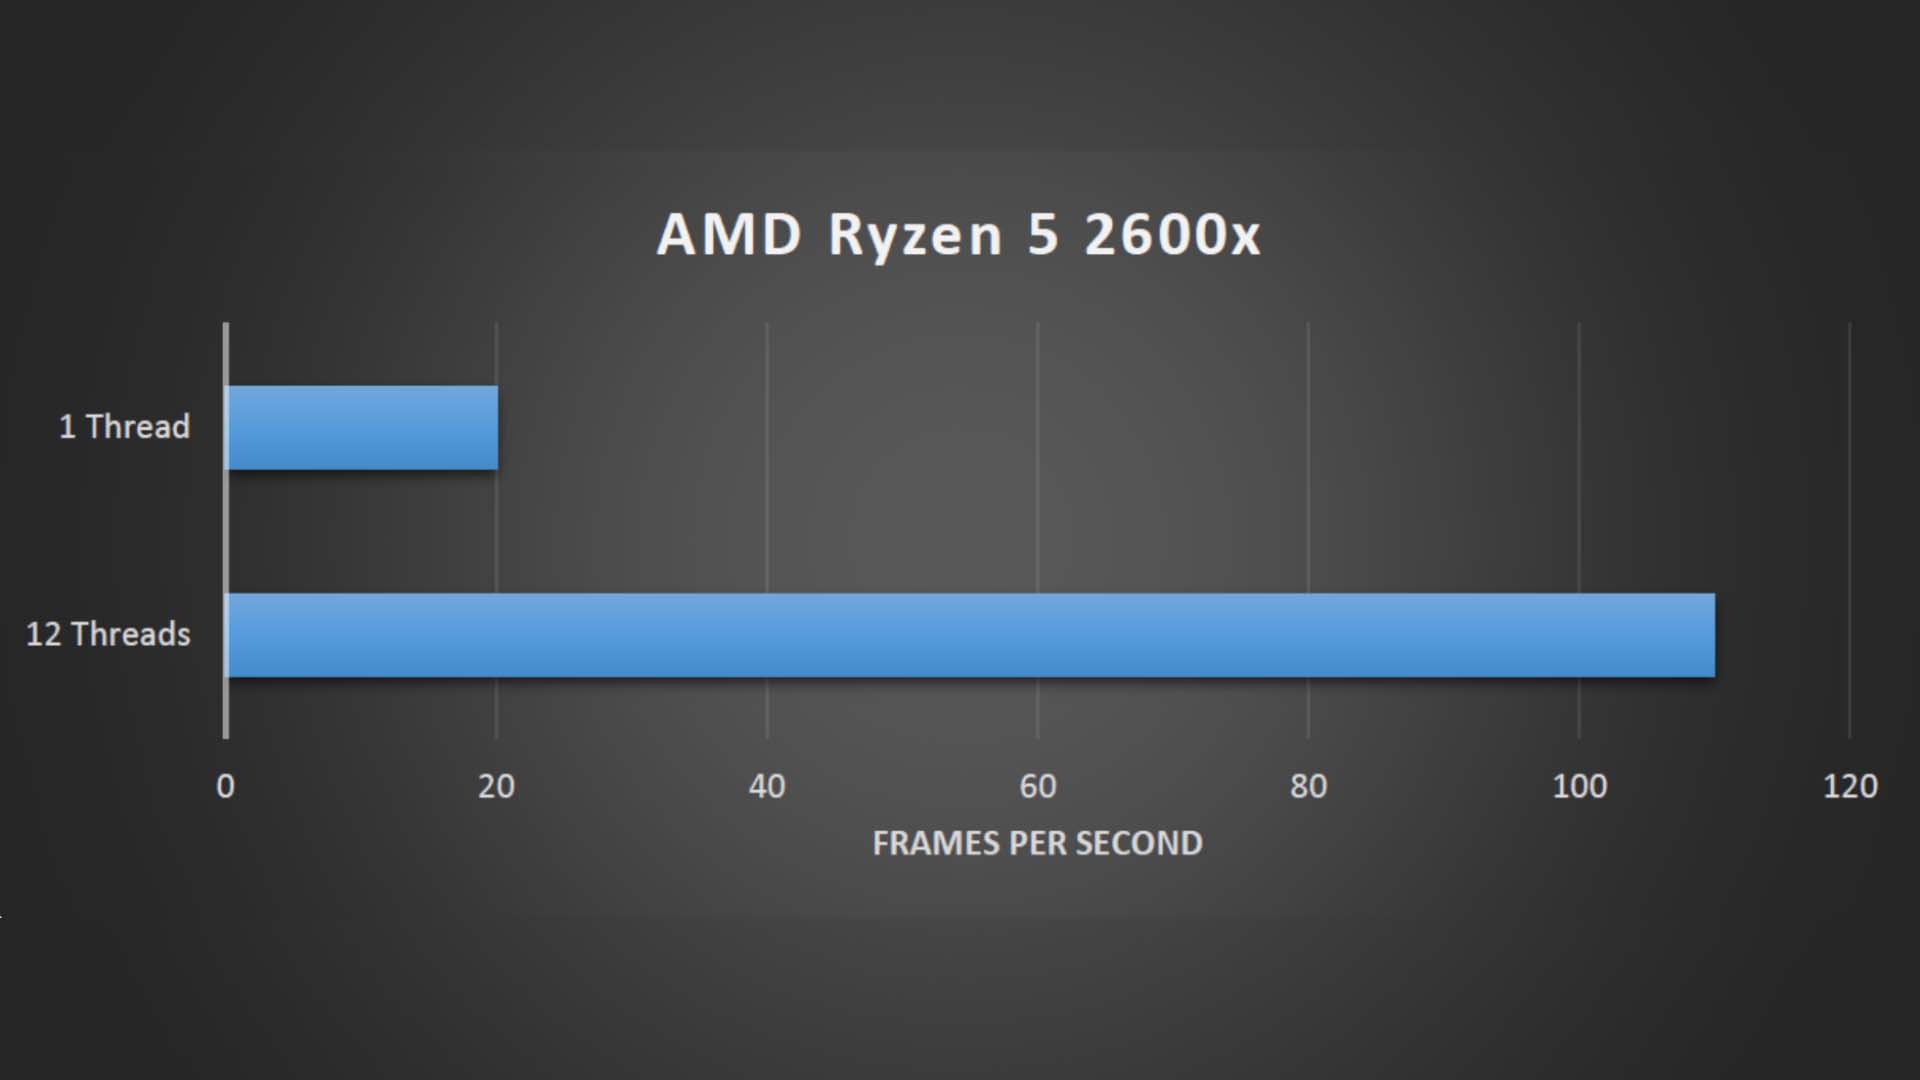 Single vs Multi core benchmark results on an AMD CPU